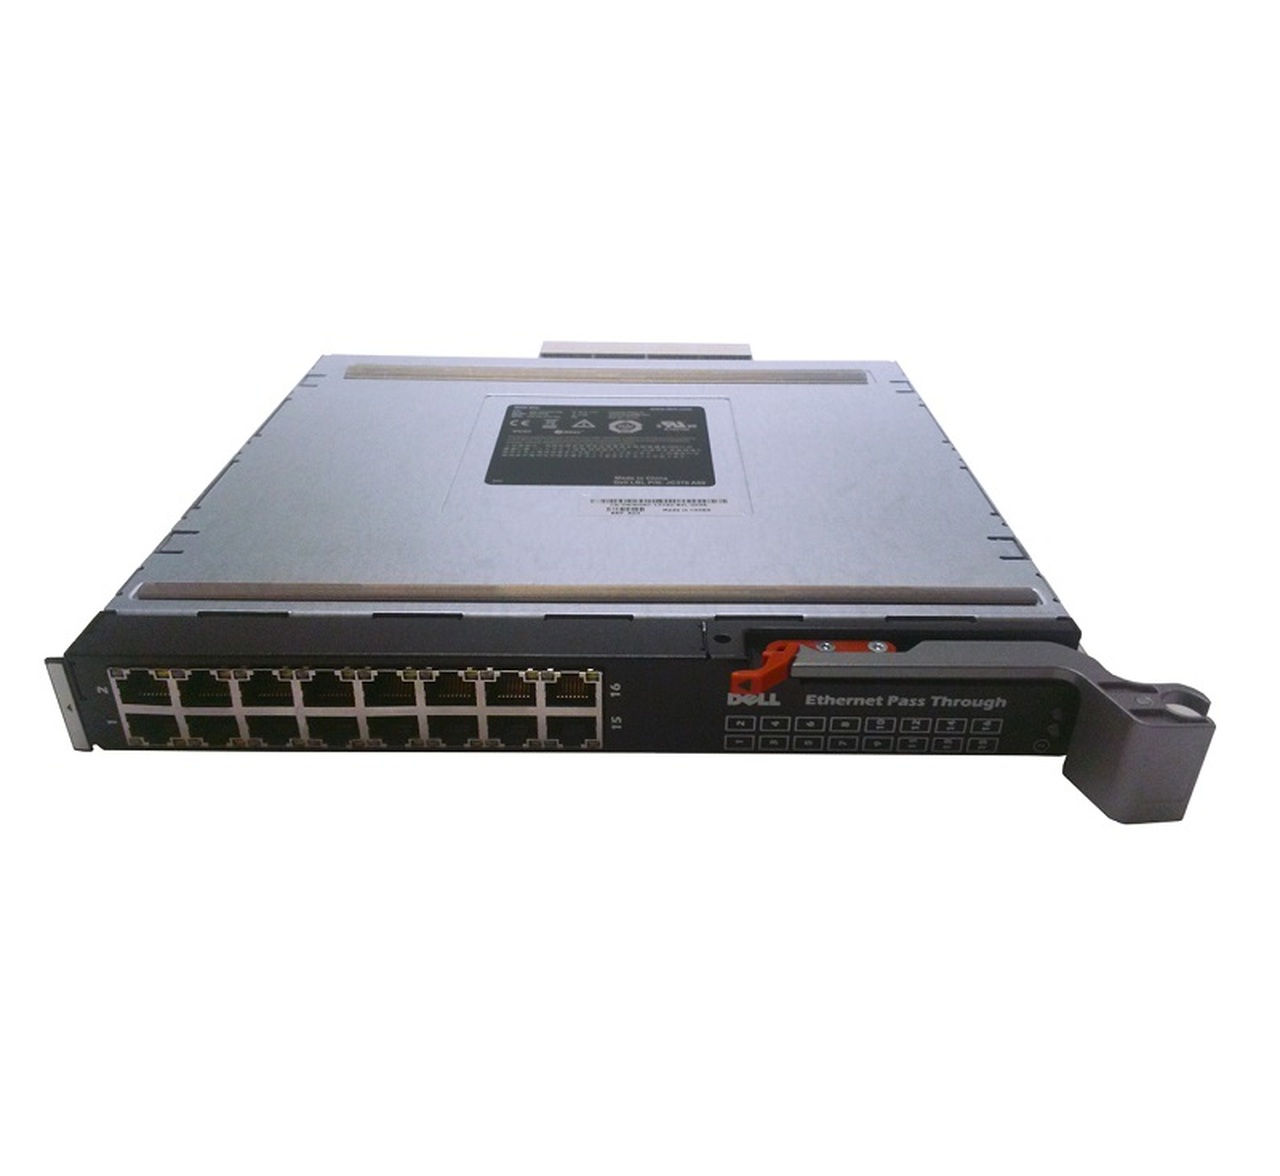 DELL M1000E 16-Port Ethernet Pass Through Module